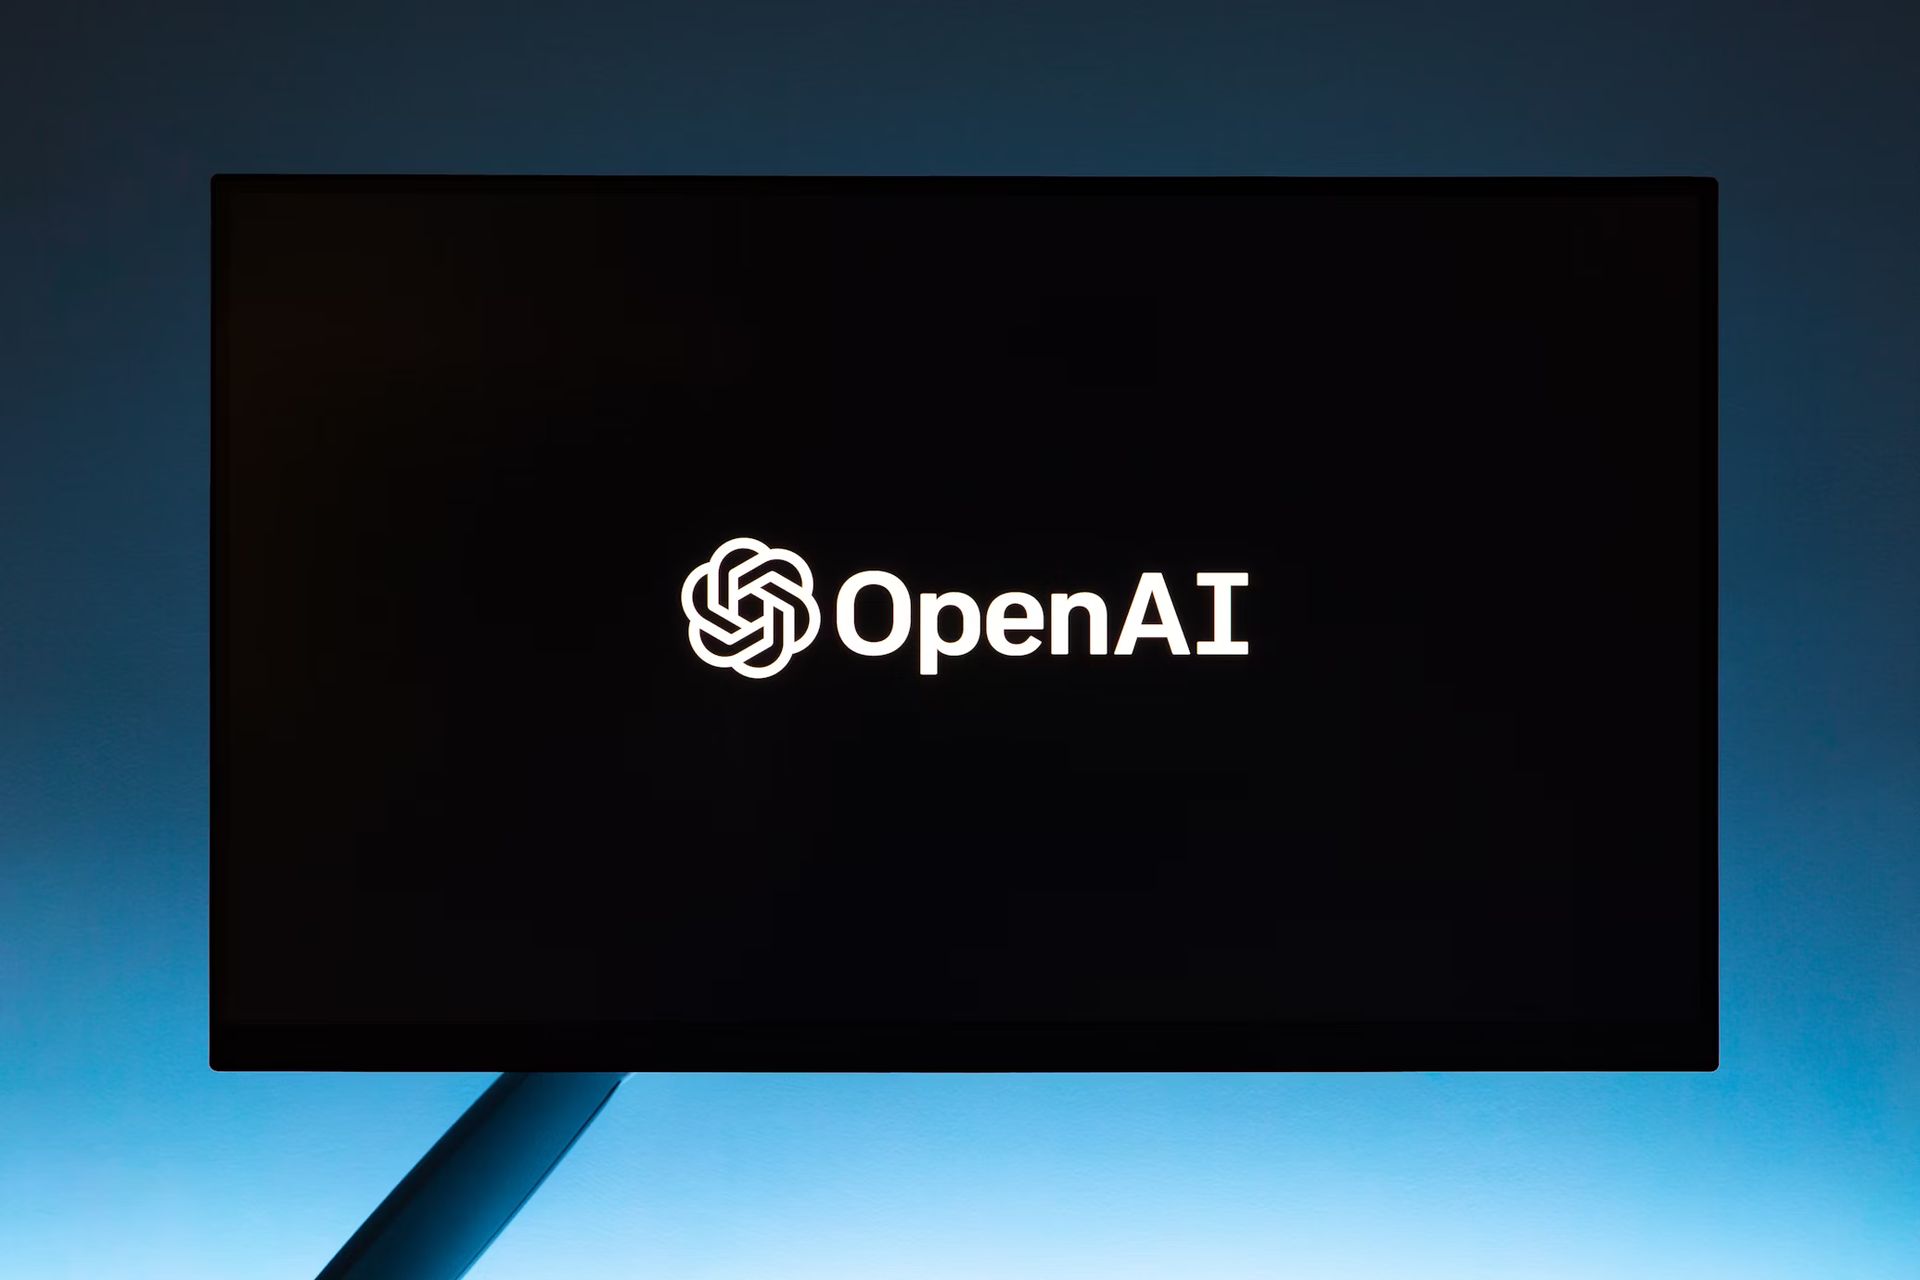 OpenAI used YouTube videos to train AI, report claims